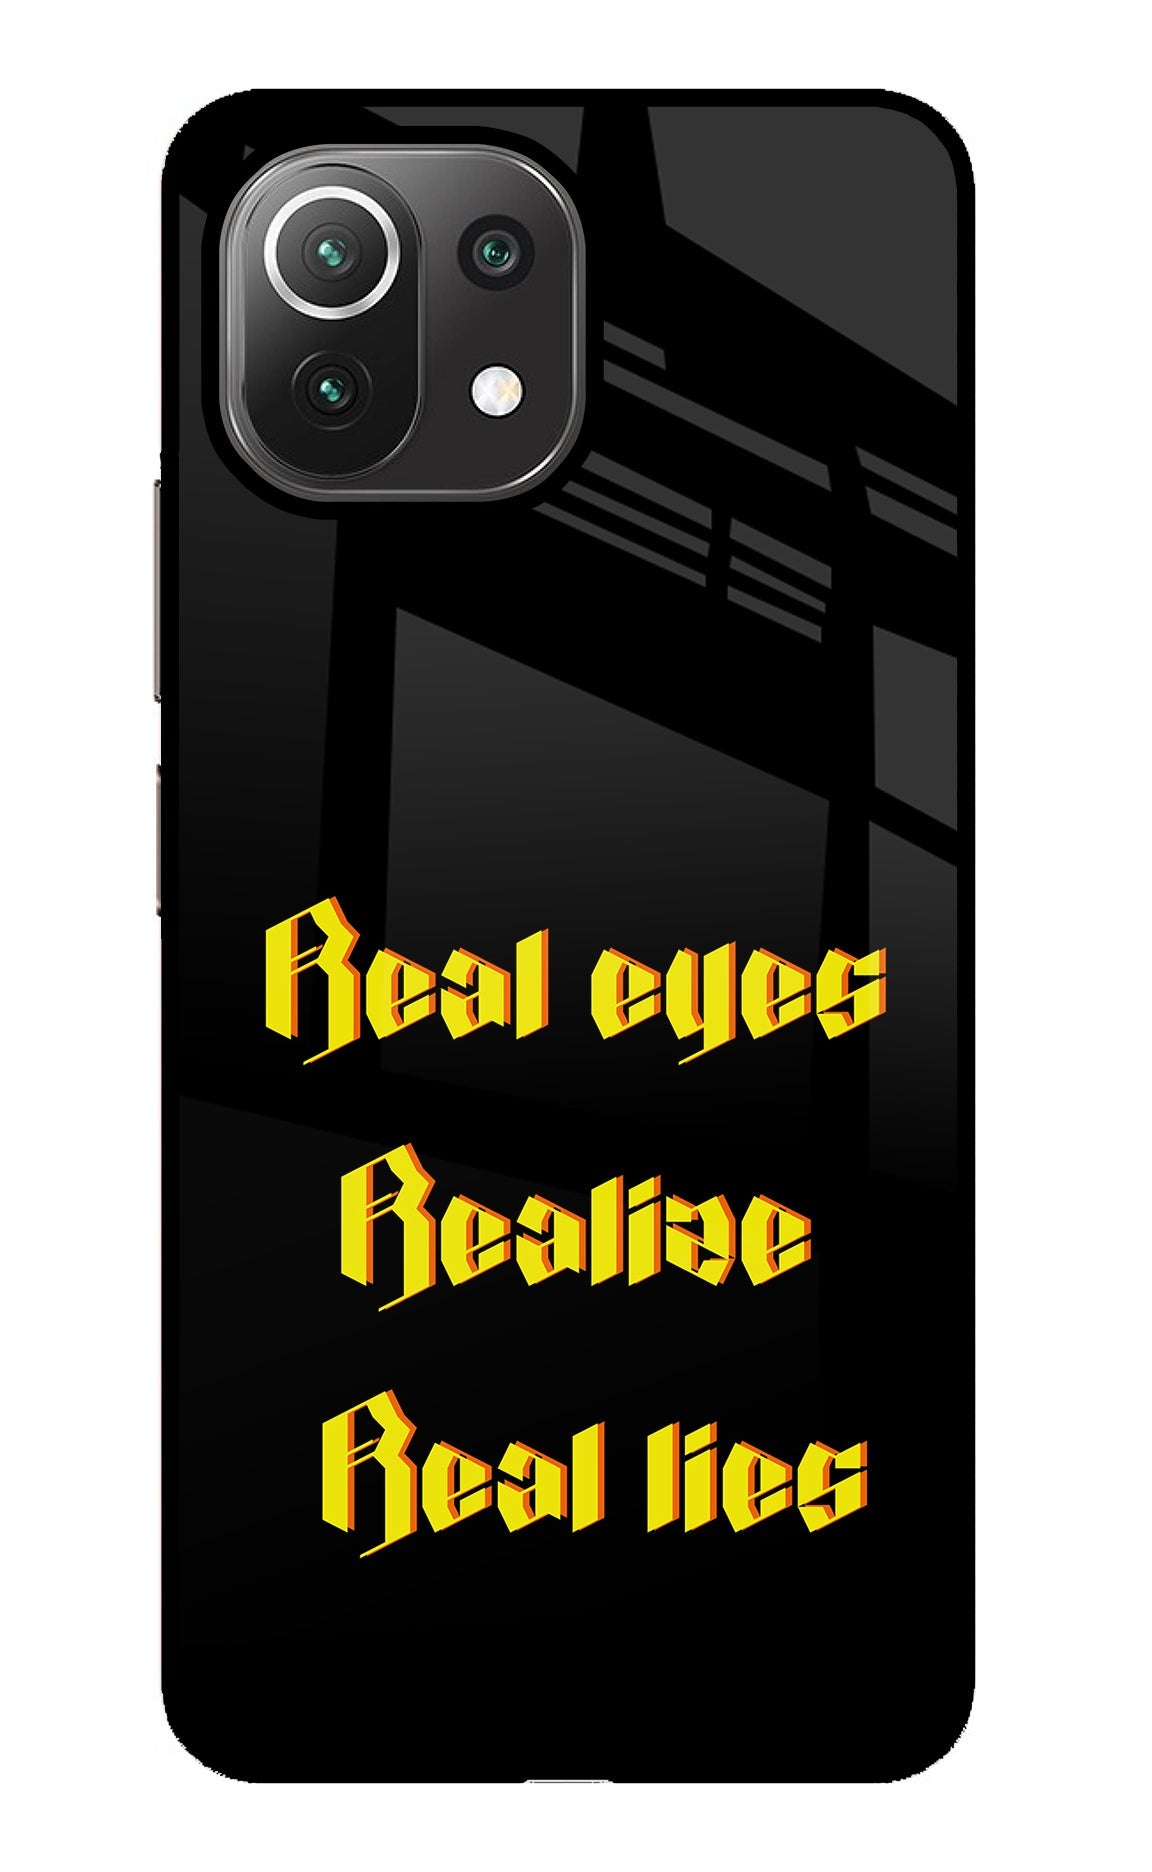 Real Eyes Realize Real Lies Mi 11 Lite Glass Case